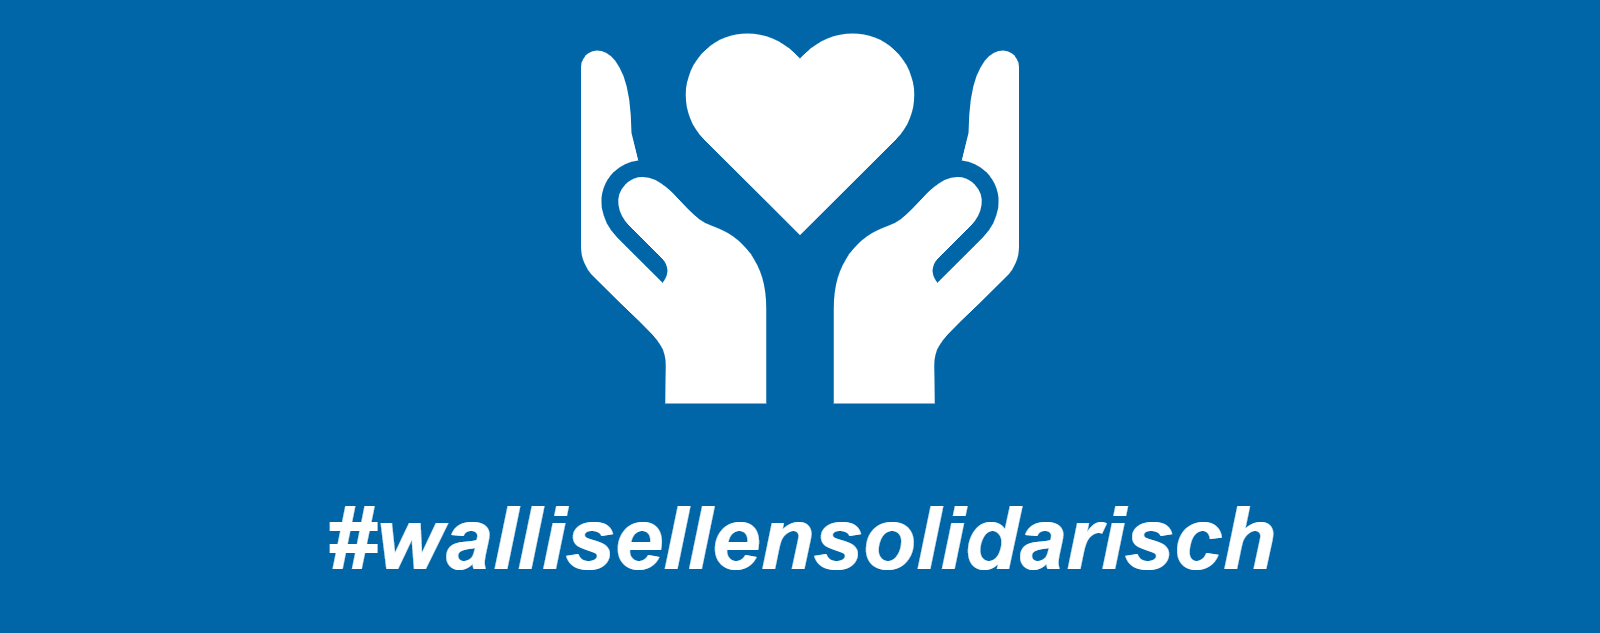 (c) Wallisellen-solidarisch.ch